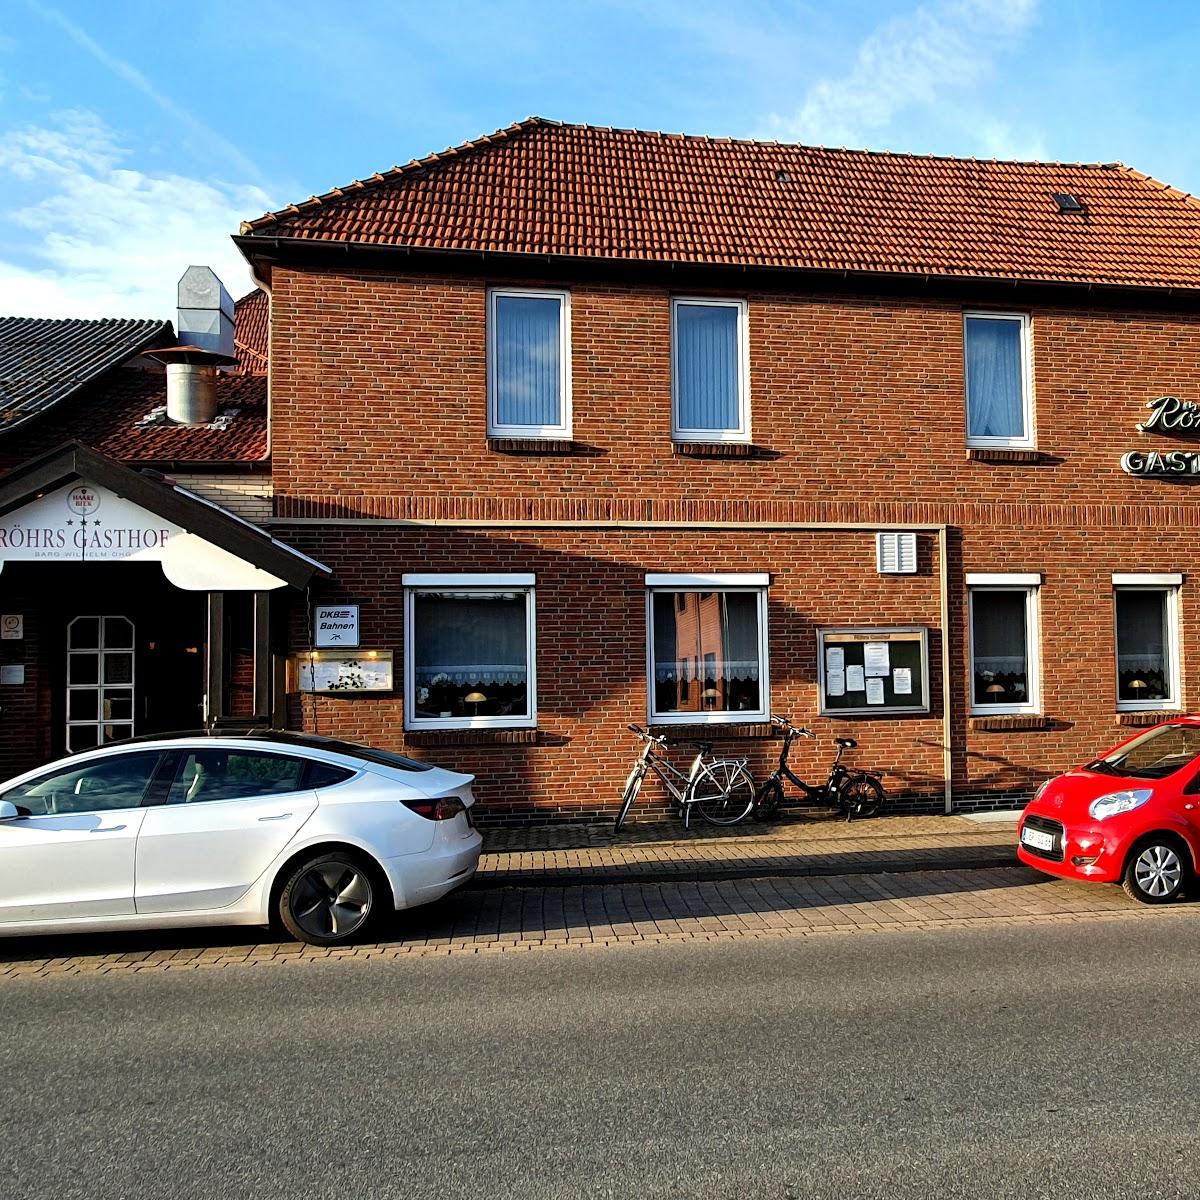 Restaurant "Röhrs Gasthof" in Sottrum